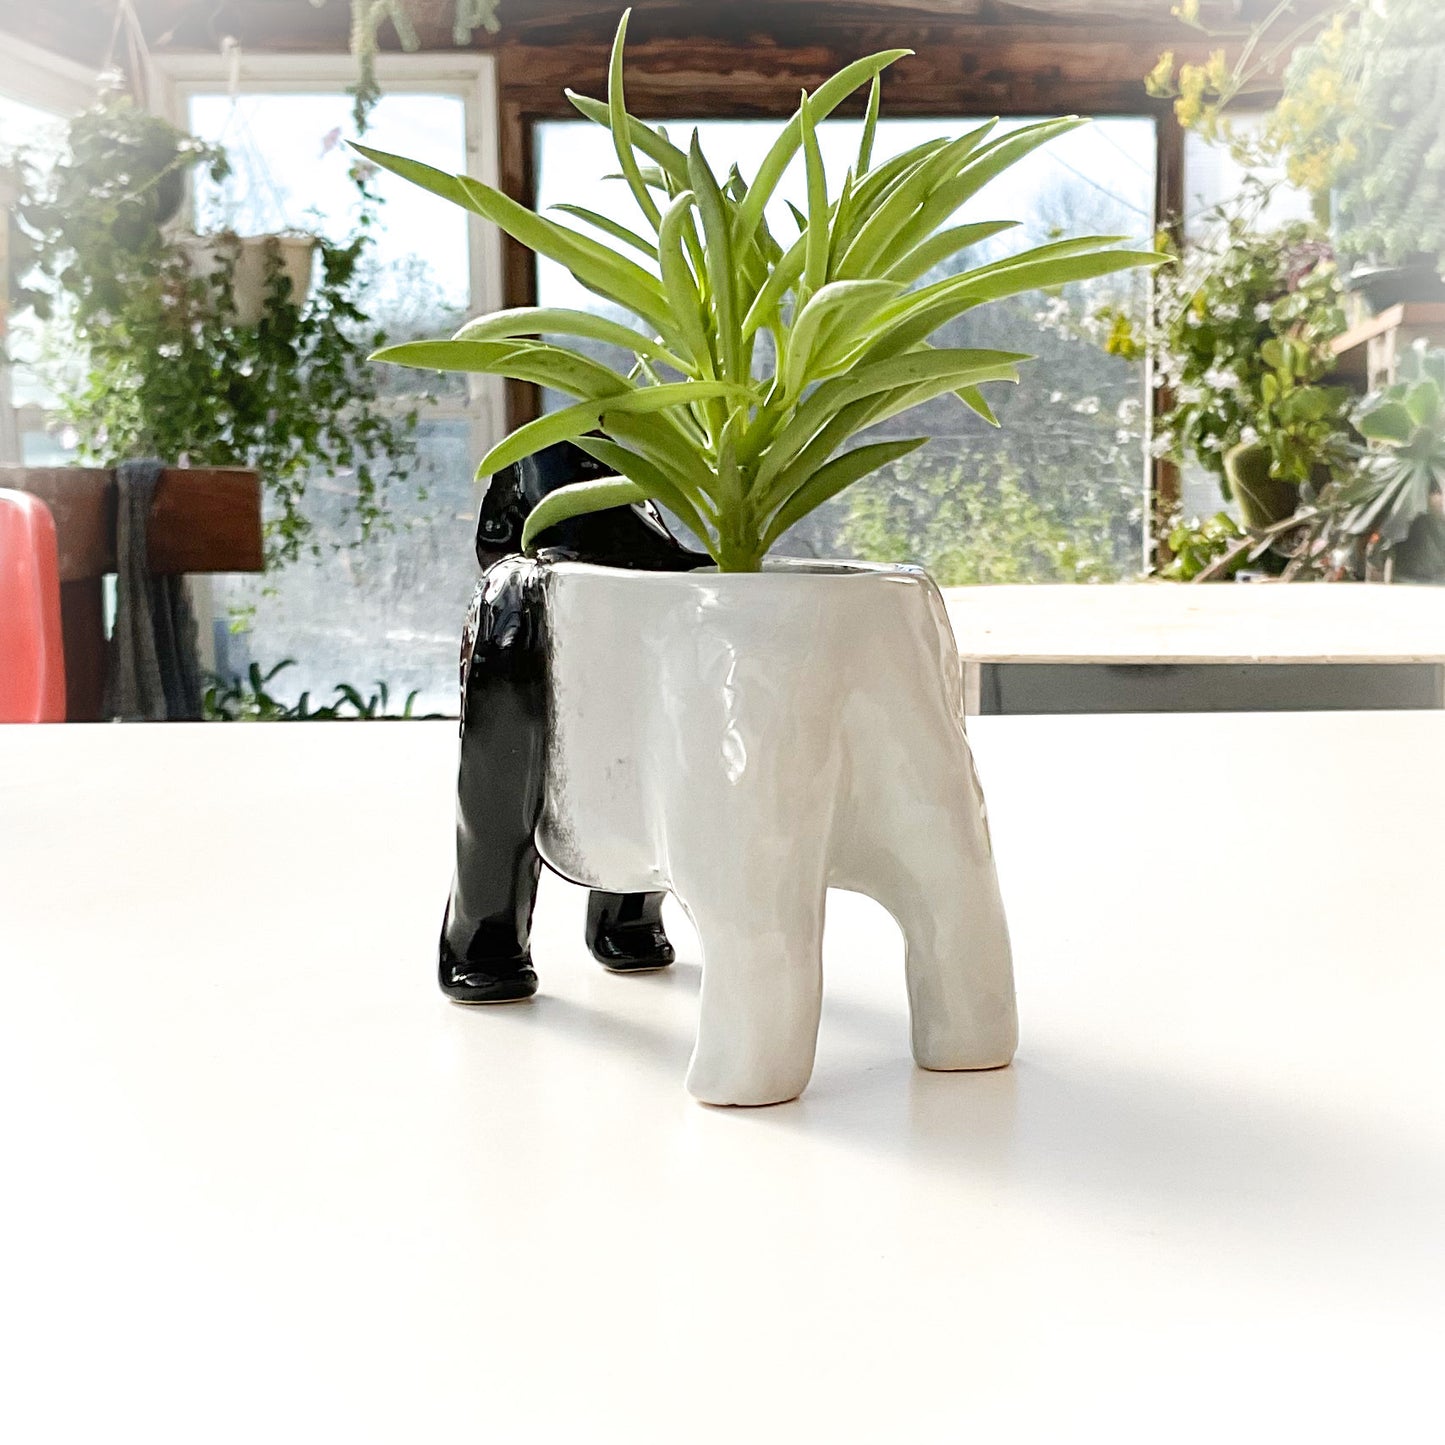 Silverback Gorilla Planter - Gorilla Succulent Pot